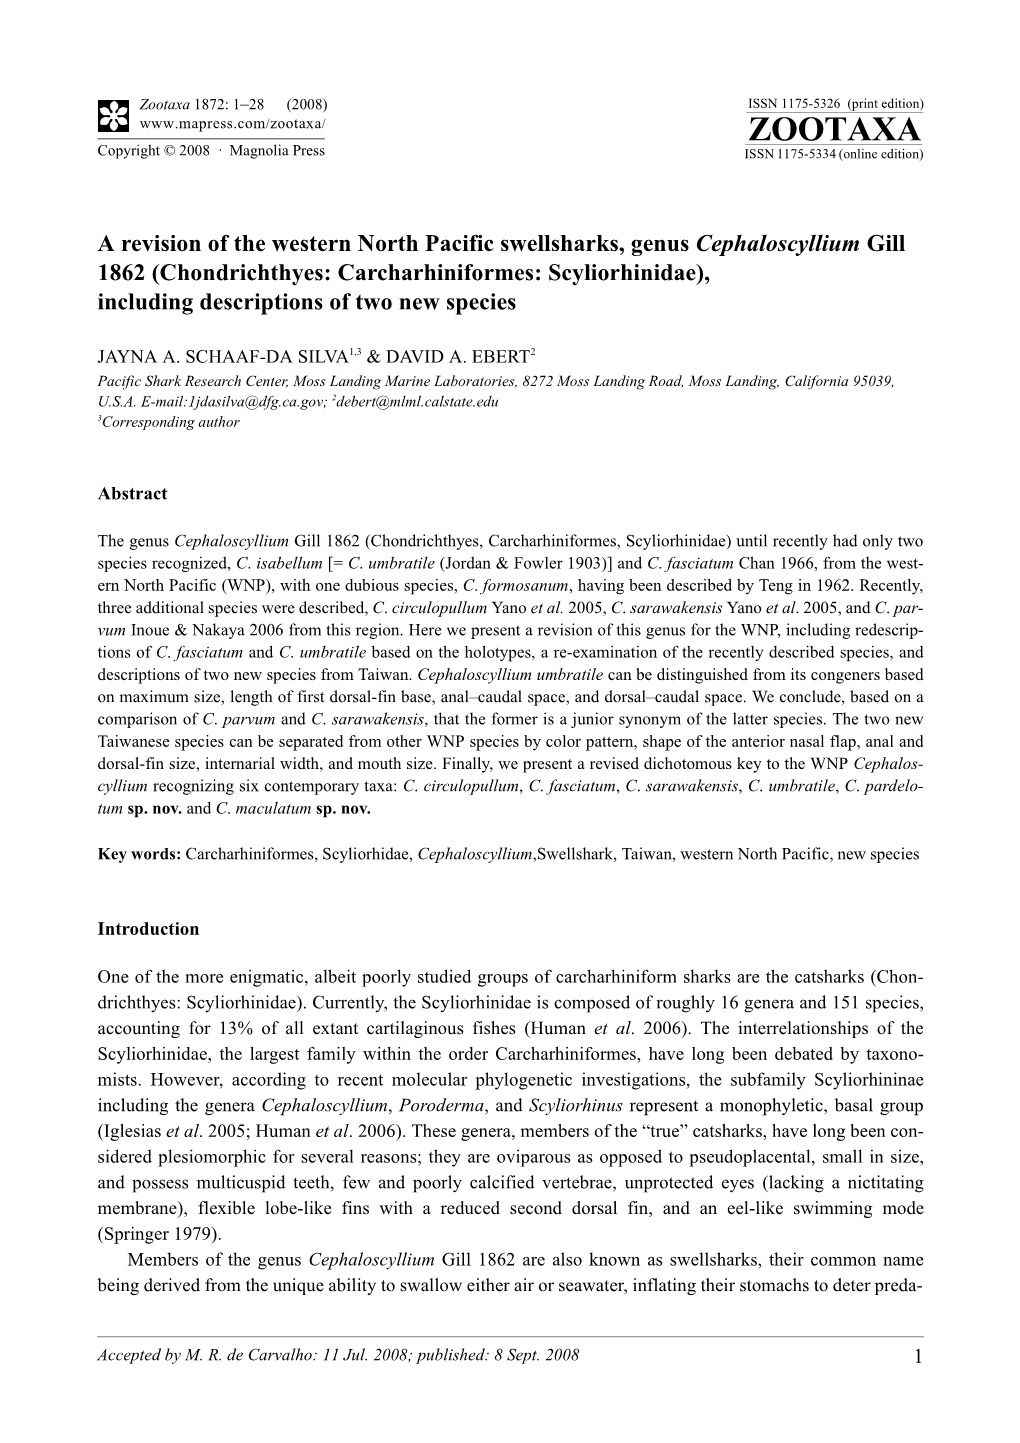 Zootaxa, a Revision of the Western North Pacific Swellsharks, Genus Cephaloscyllium Gill